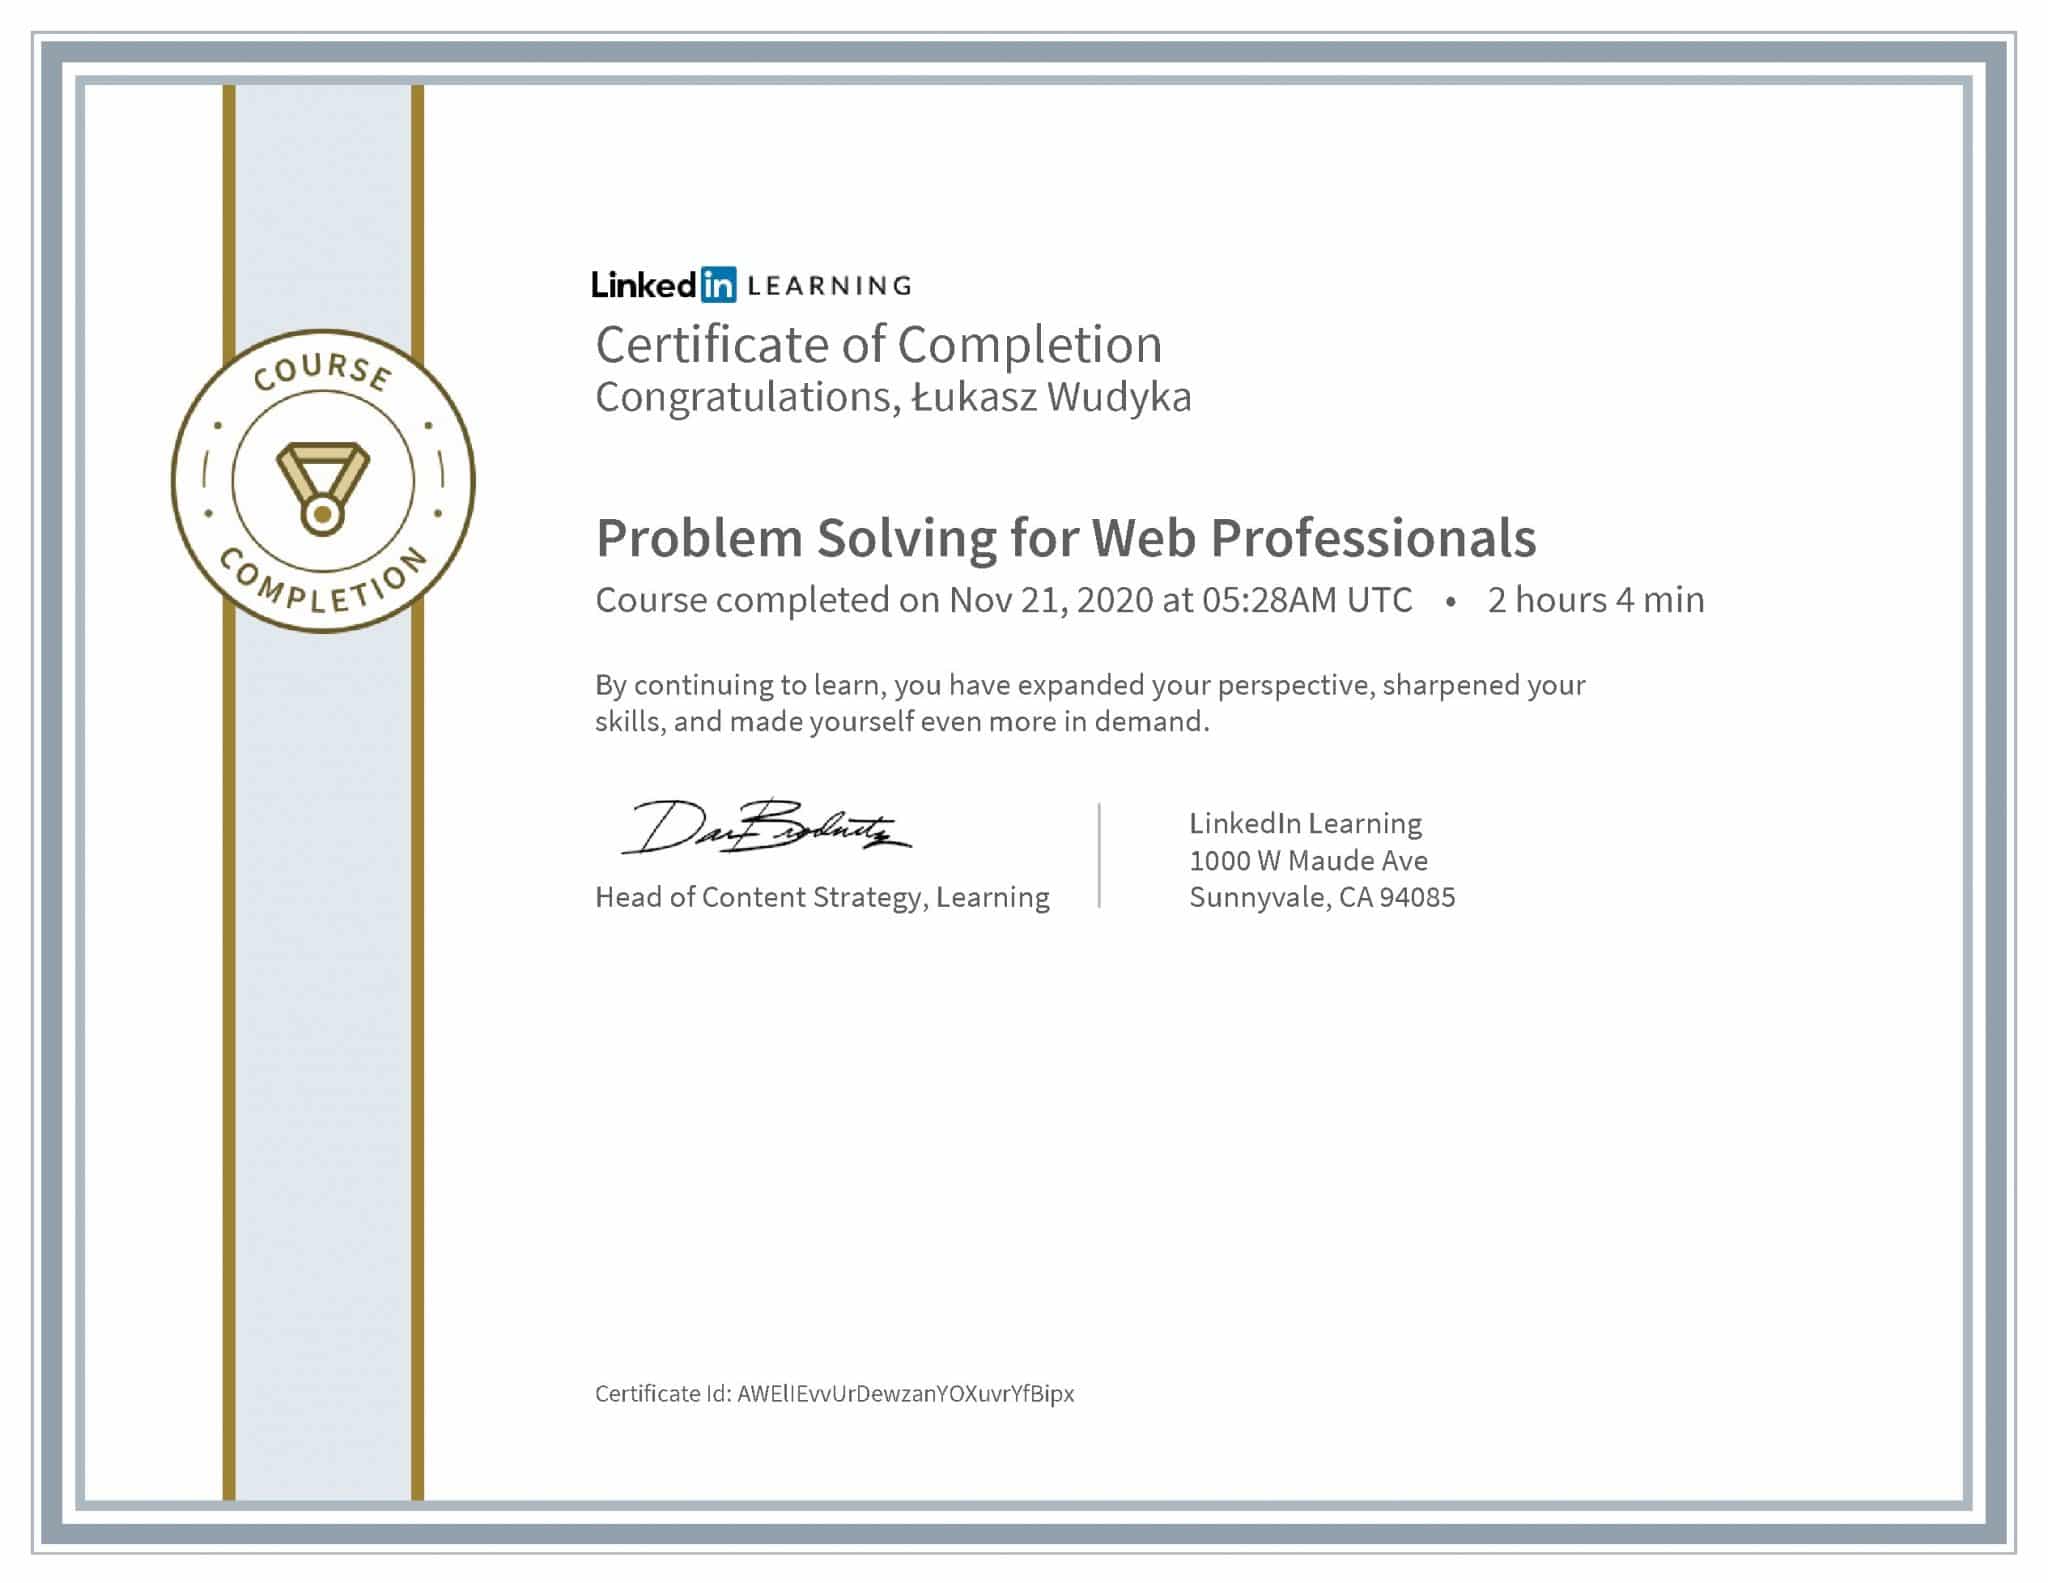 Łukasz Wudyka certyfikat LinkedIn Problem Solving for Web Professionals